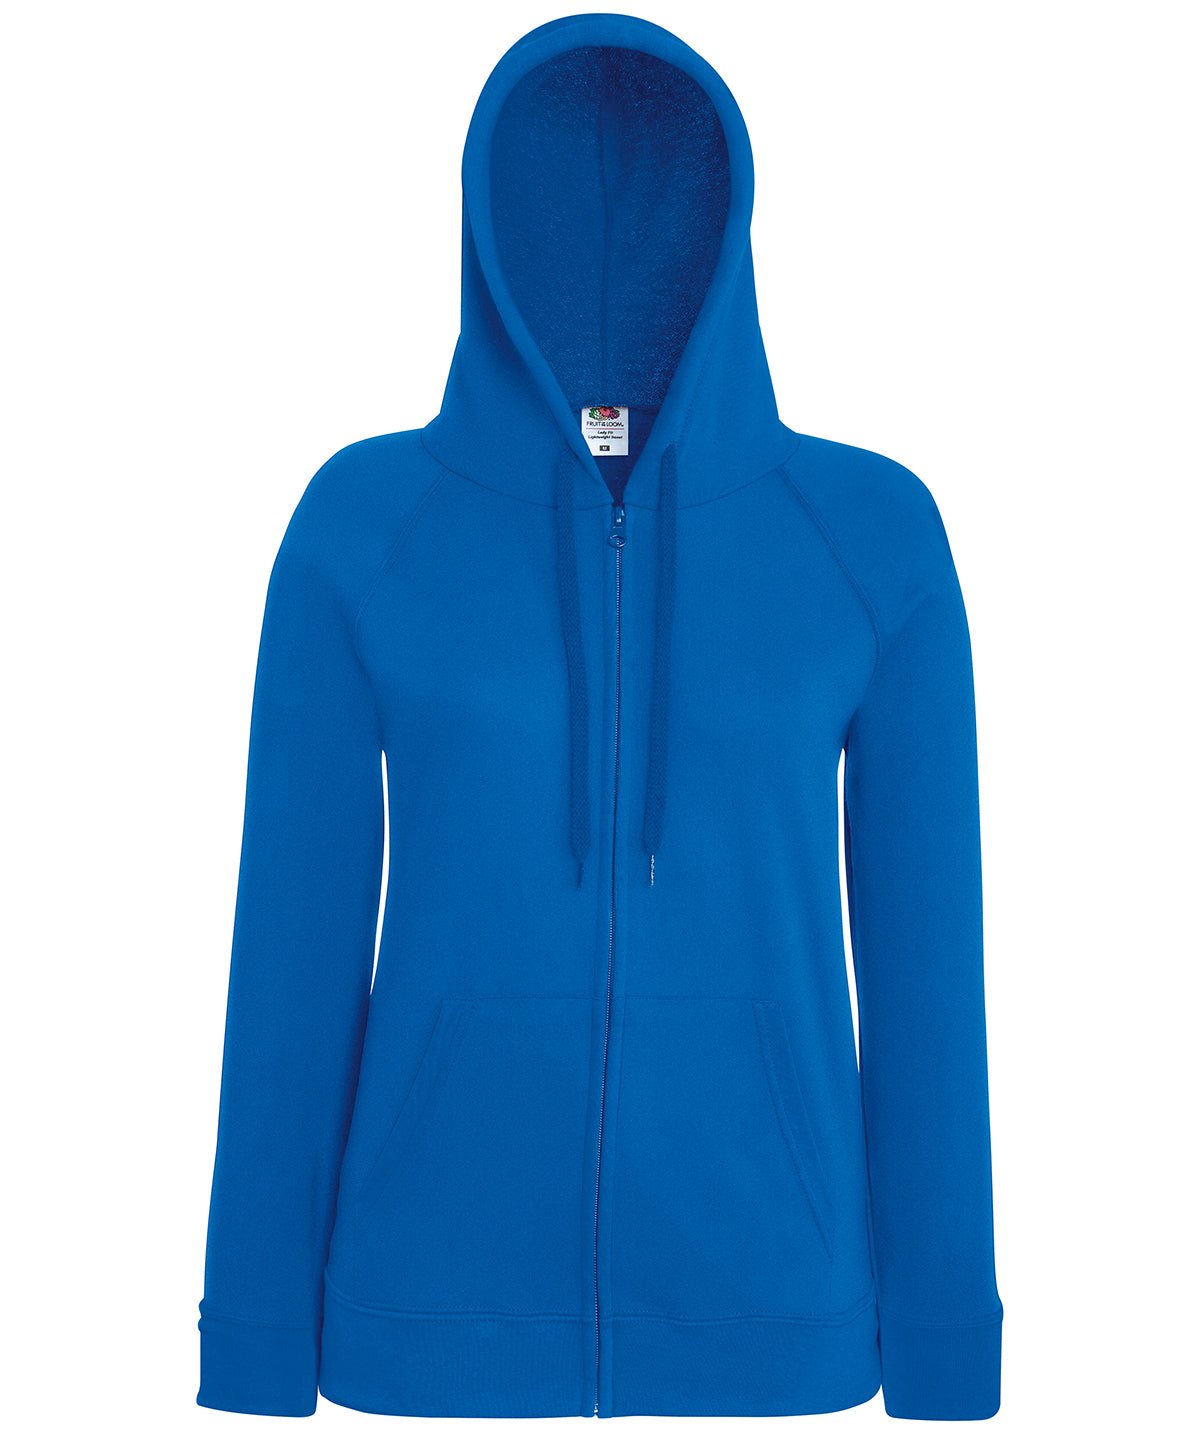 Hettupeysur - Women's Lightweight Hooded Sweatshirt Jacket